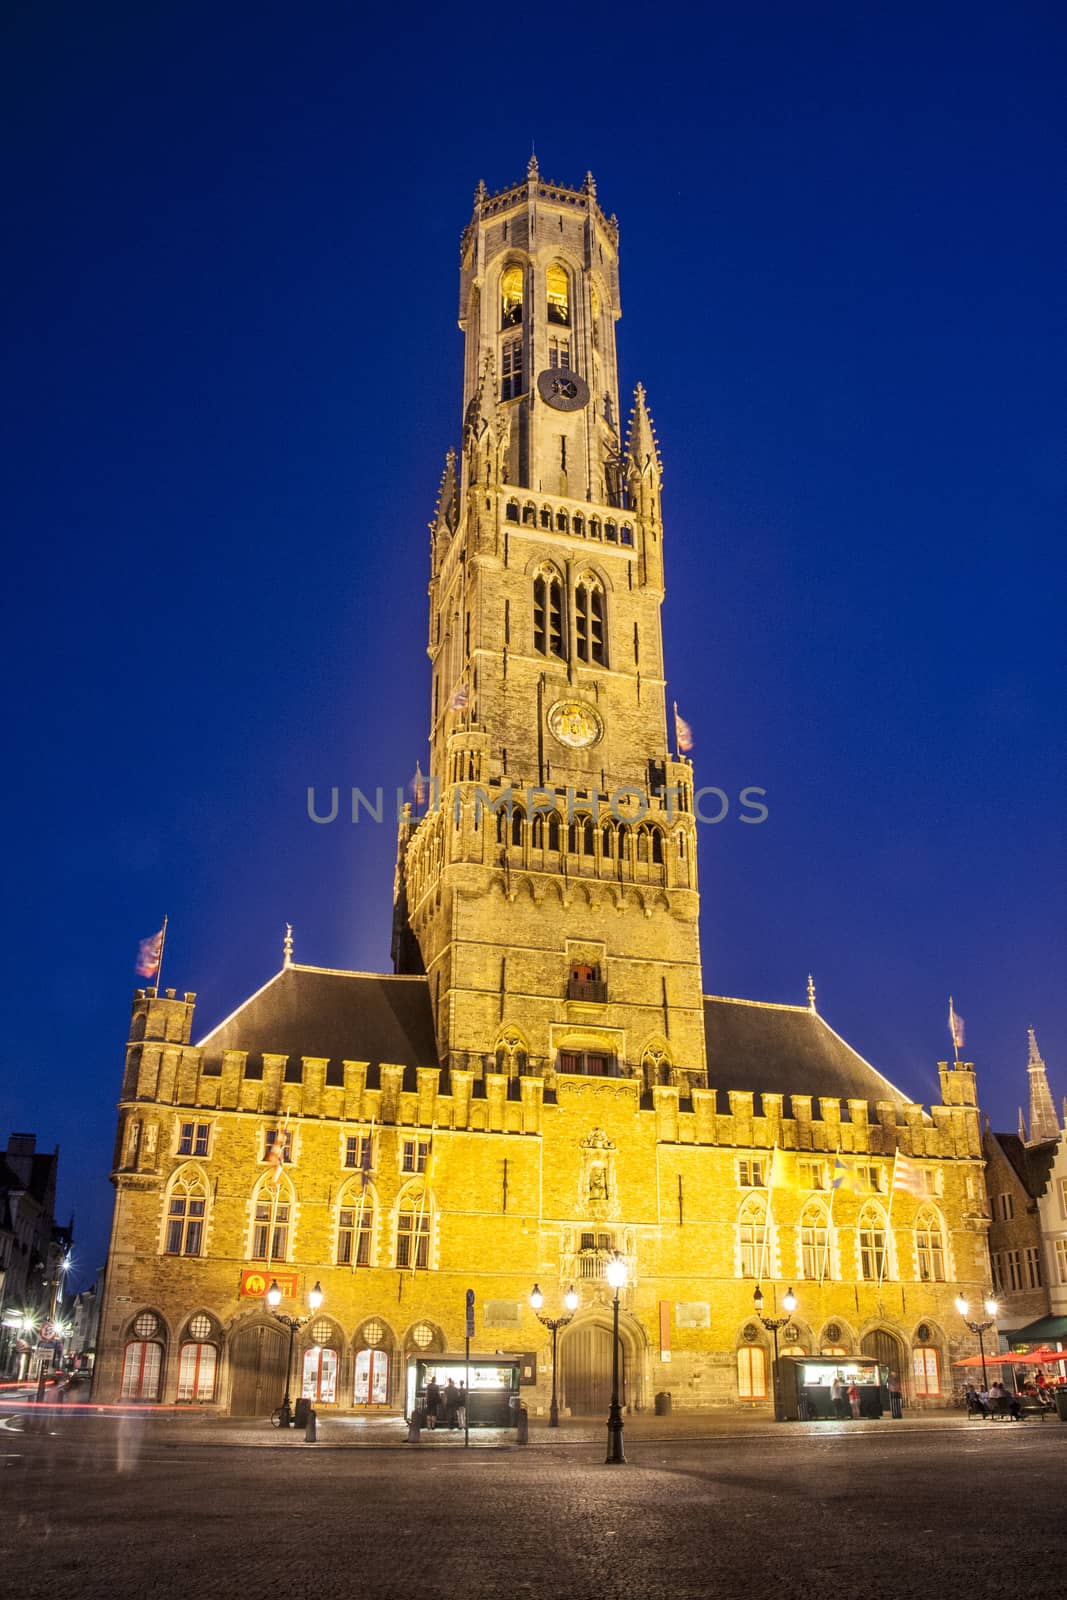 Famous Belfry of Bruges at night, Belgium